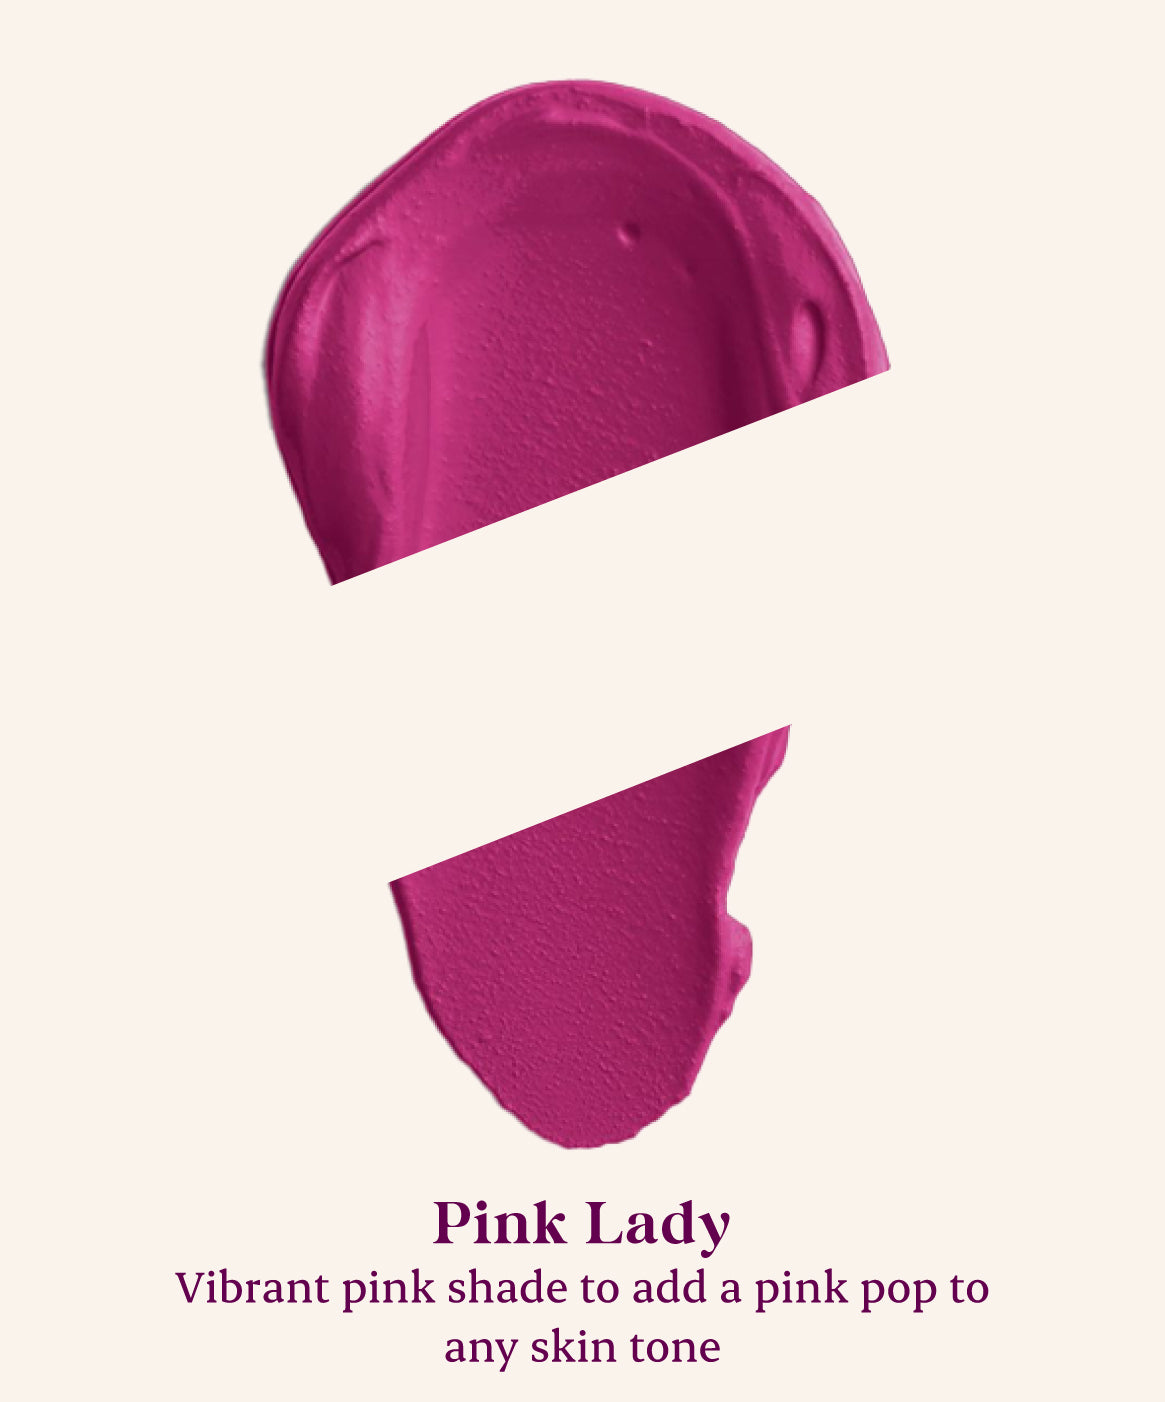 Pink Lady 03 - Vibrant pink